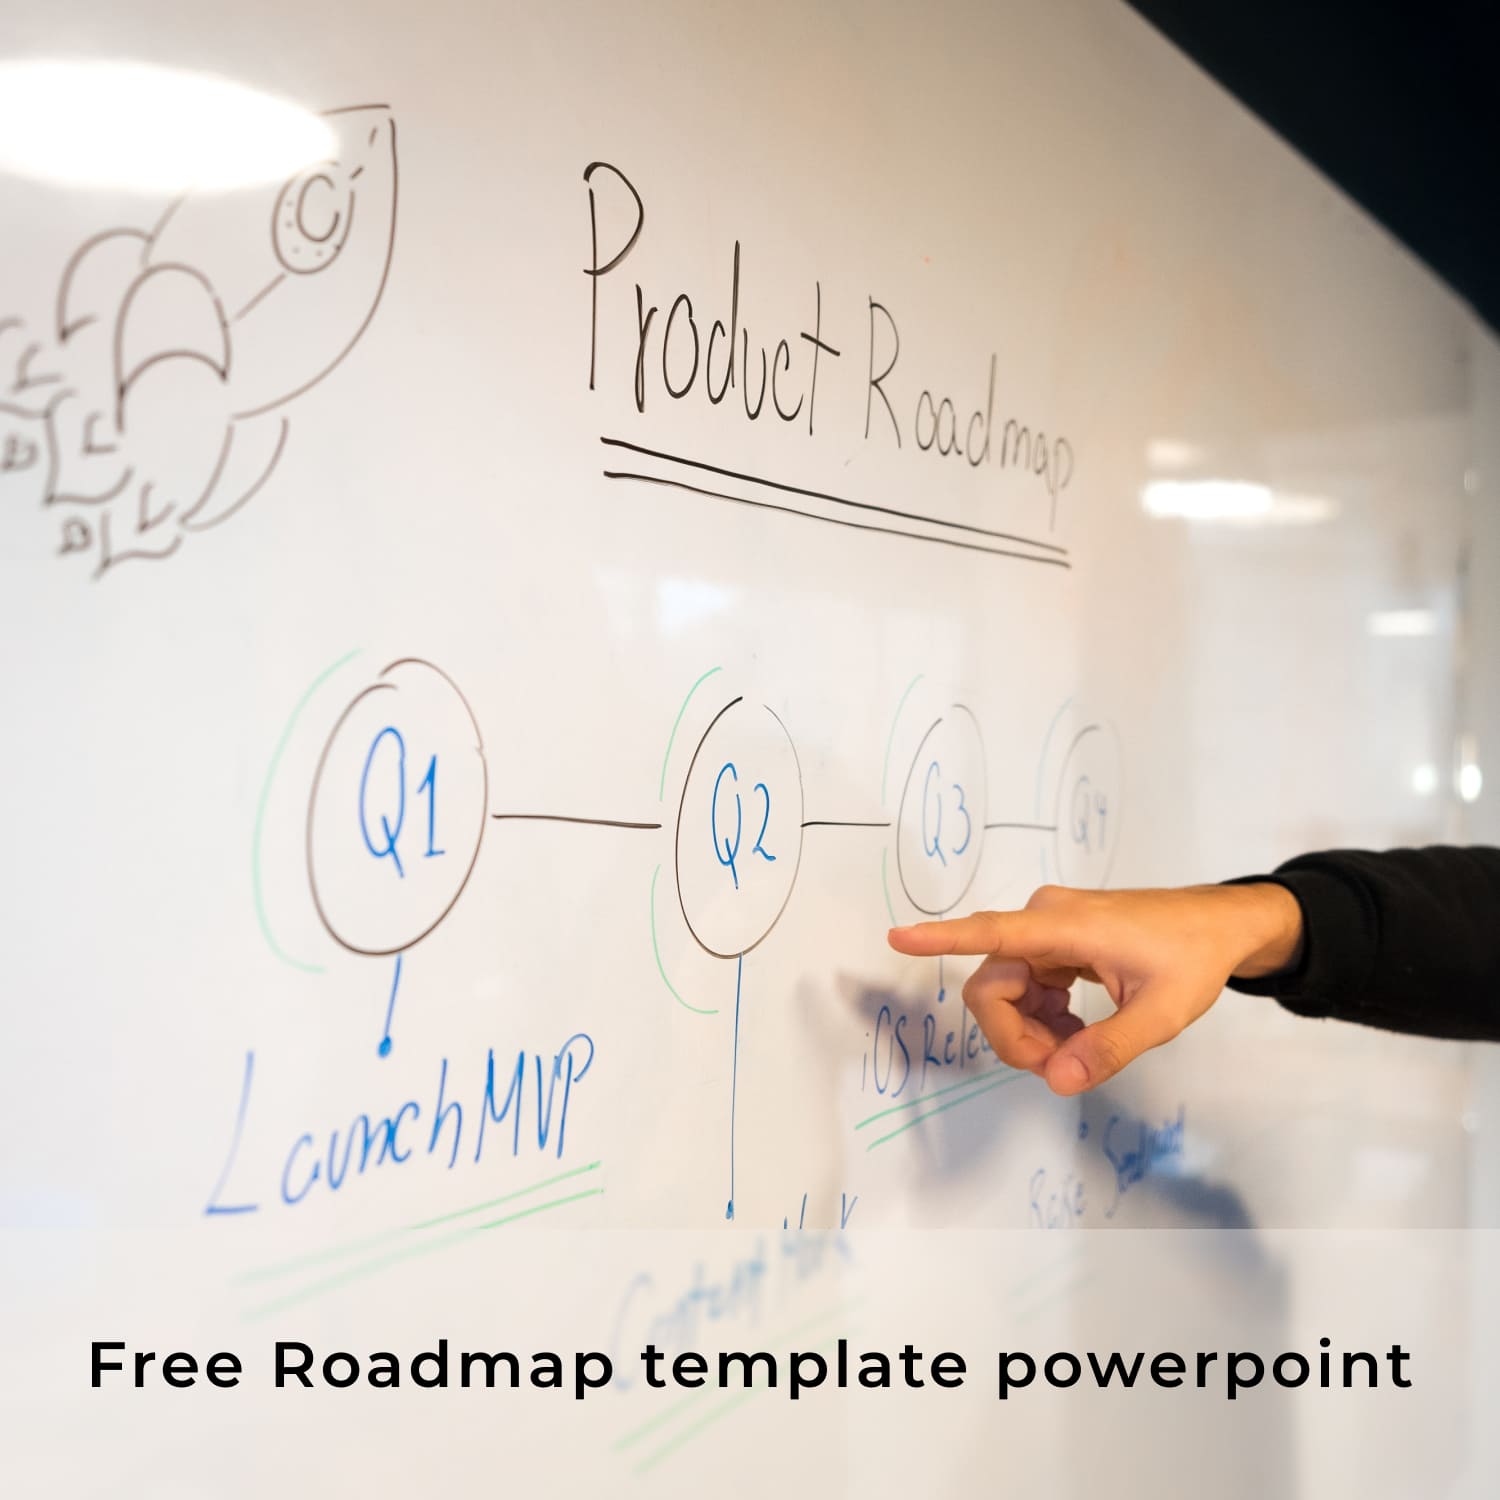 Free Roadmap Template Powerpoint 1500x1500 2.